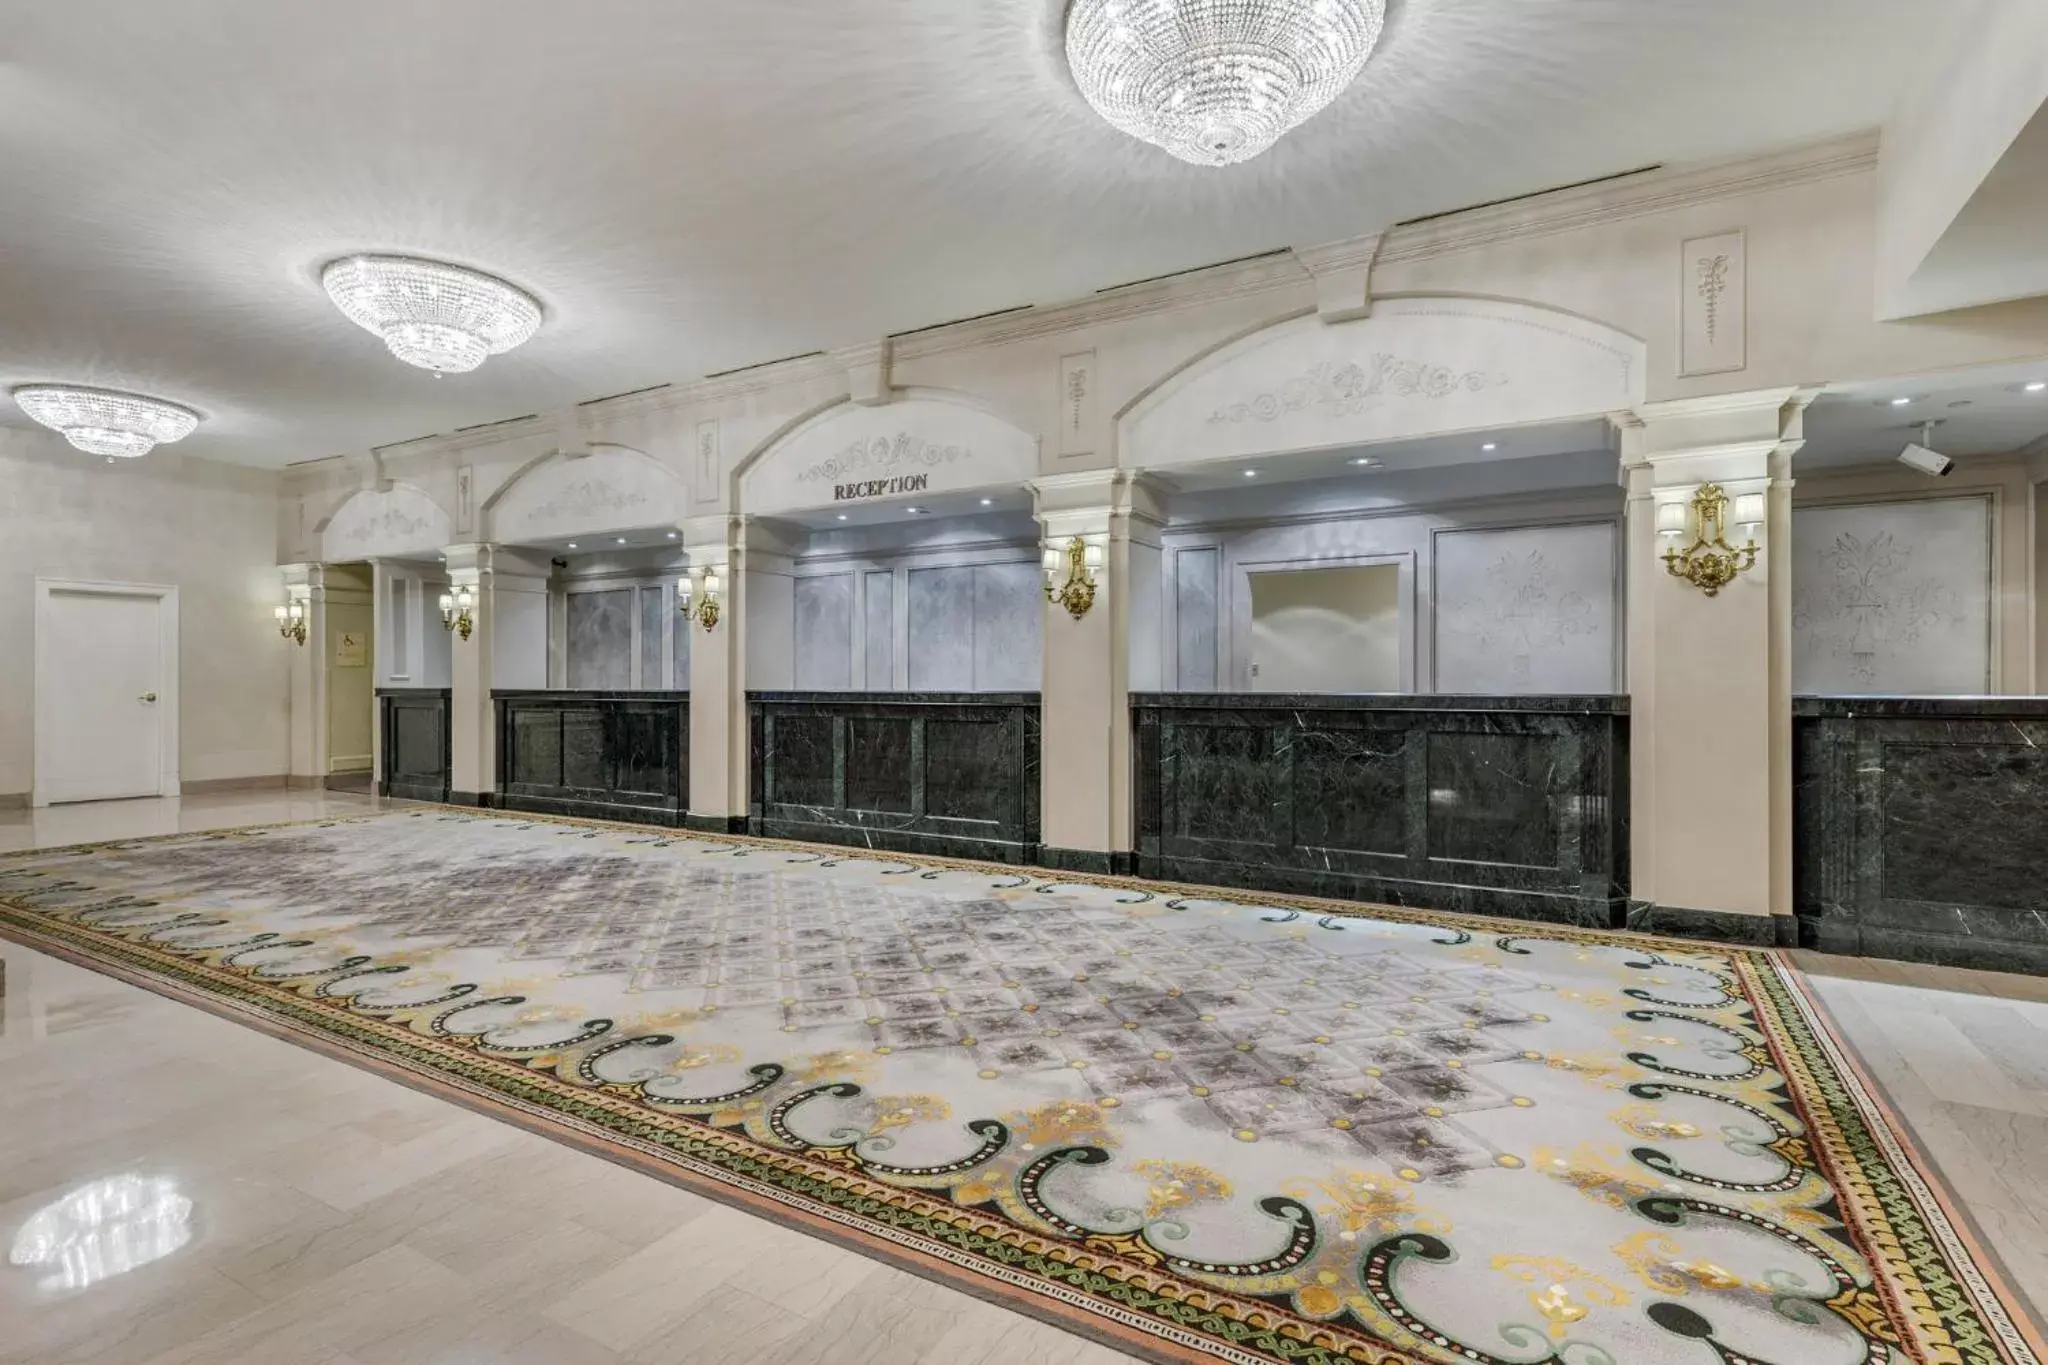 Lobby or reception in Omni Shoreham Hotel